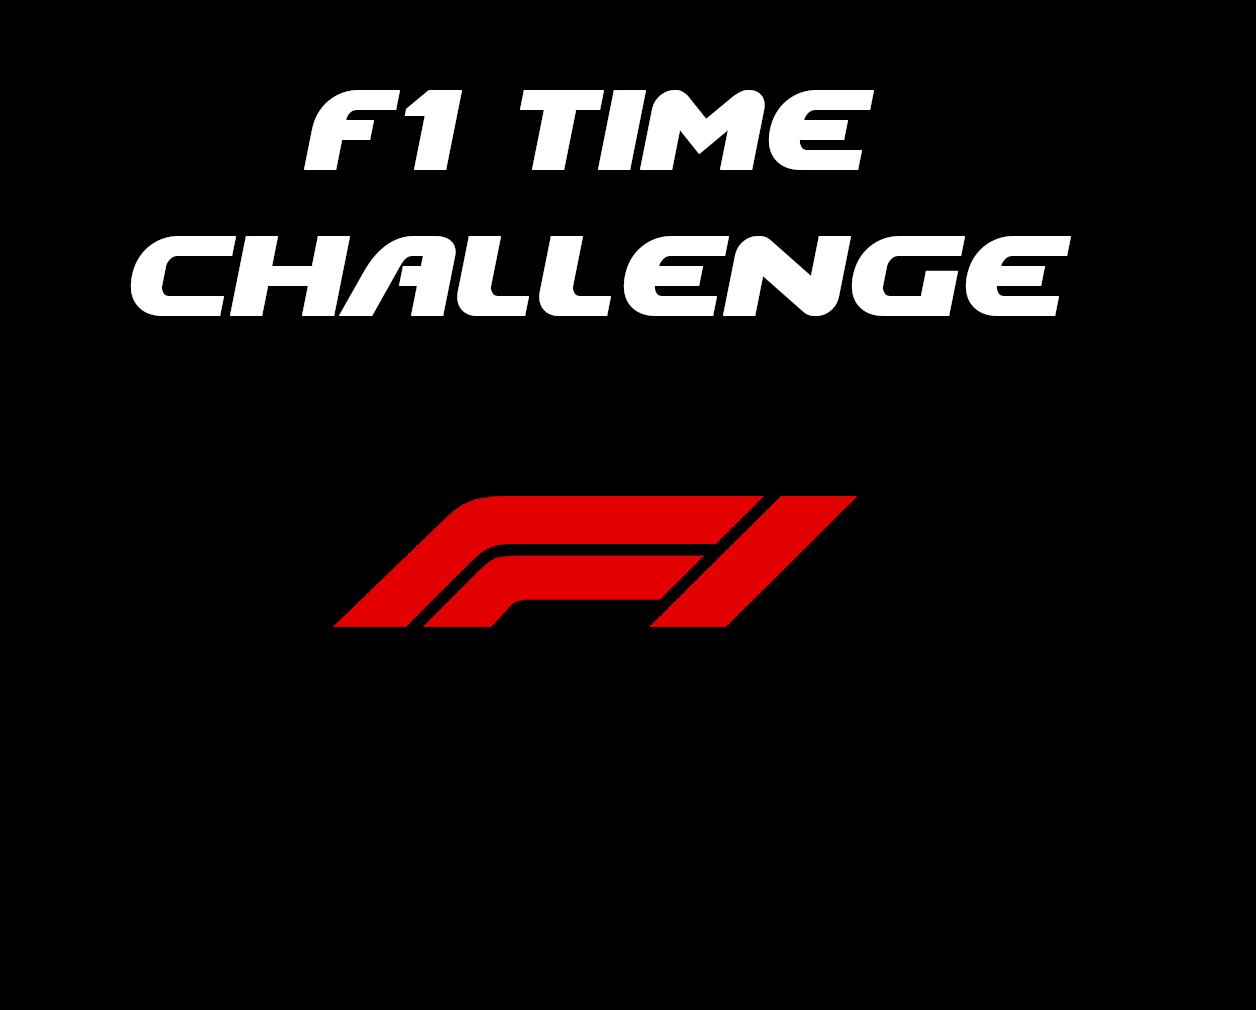 F1 TIME CHALLENGE